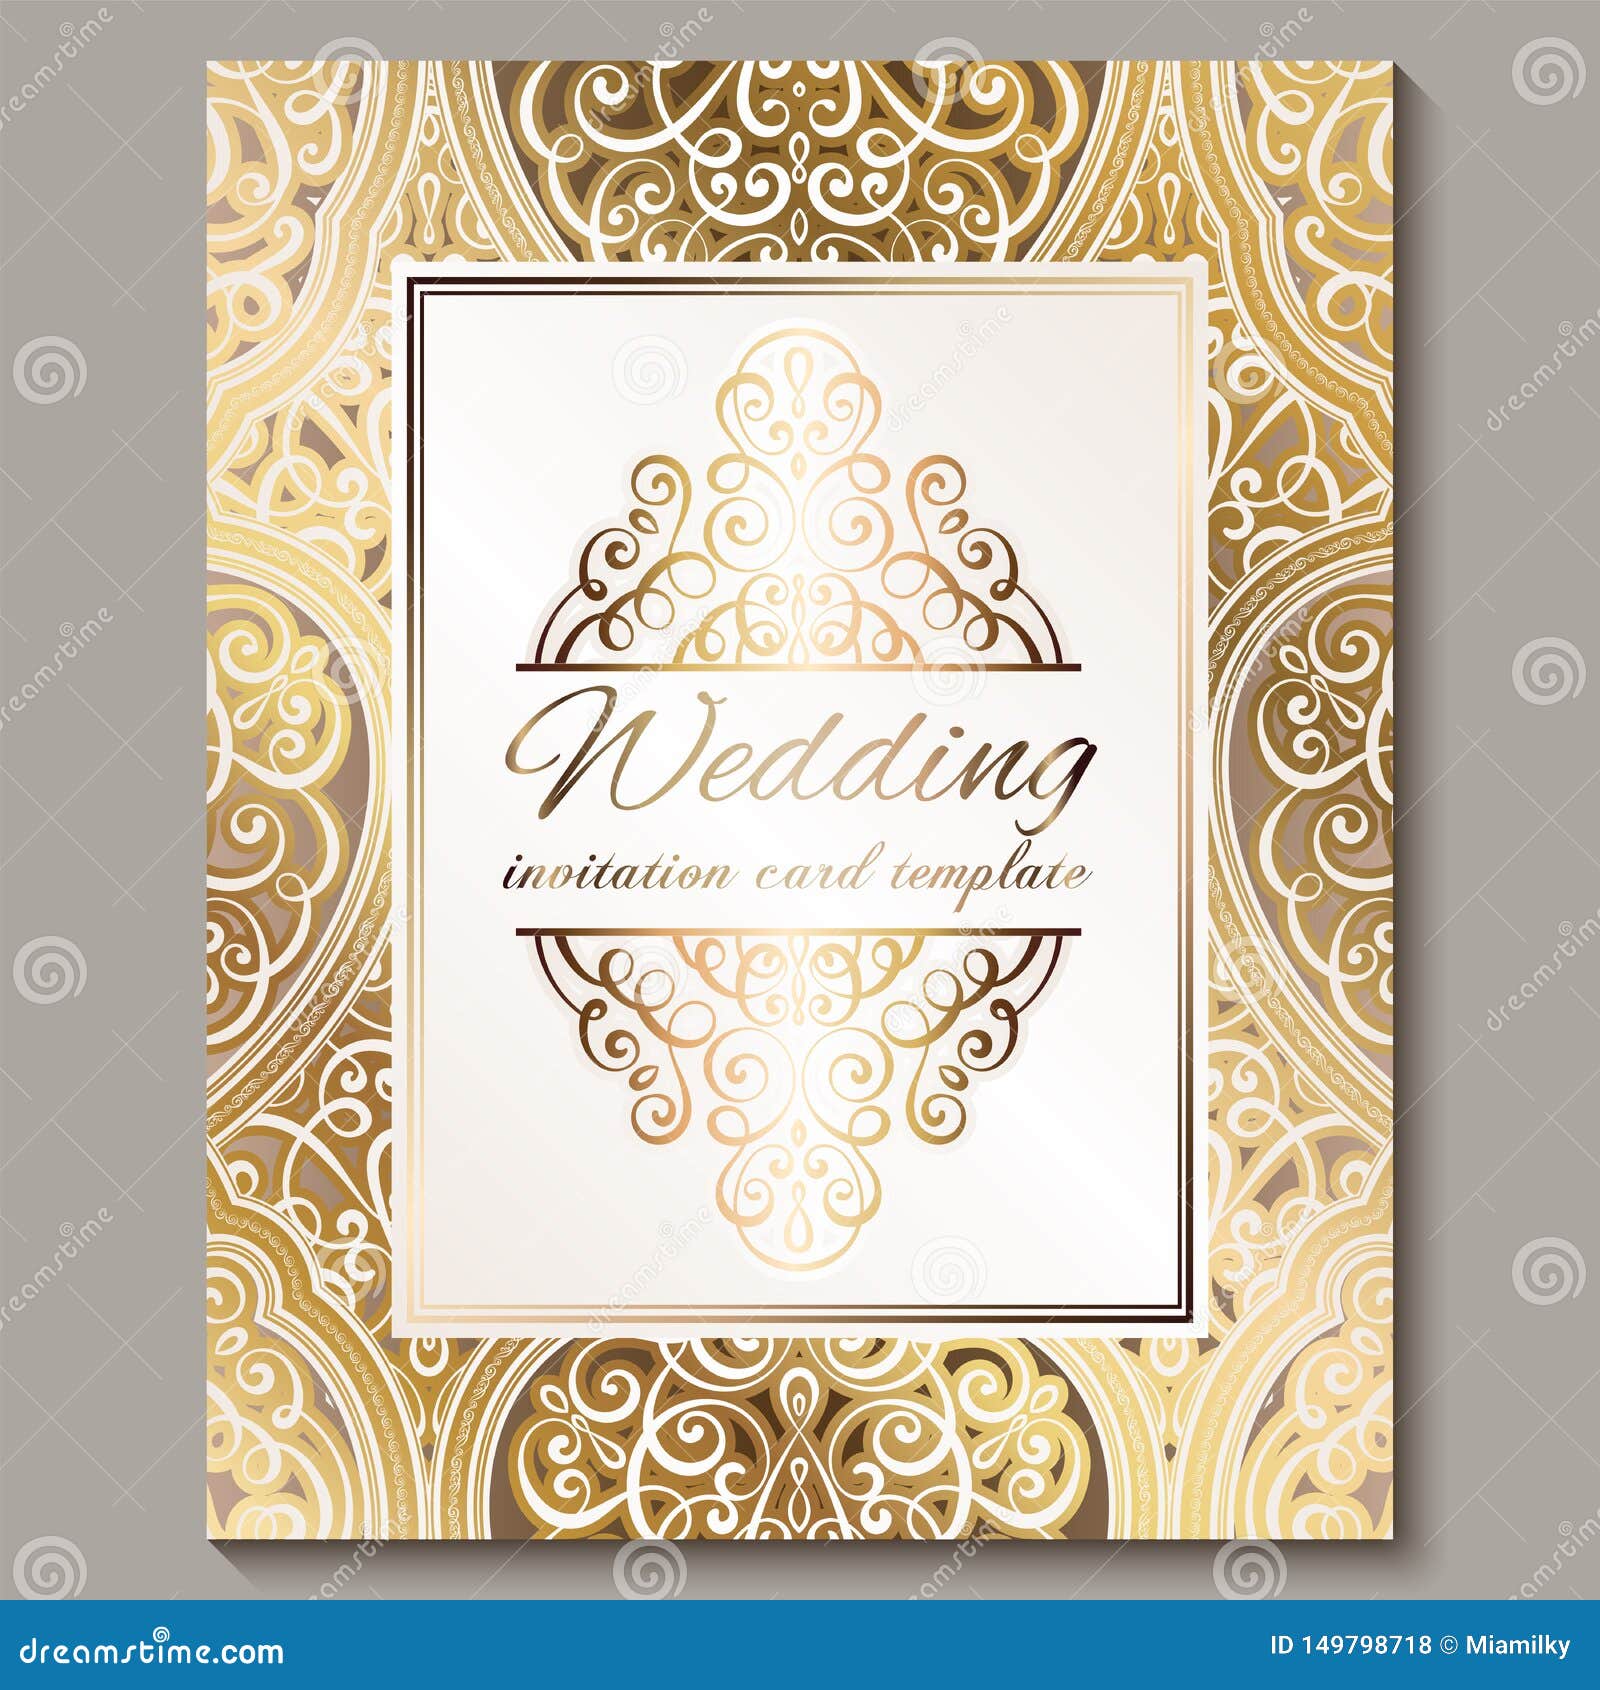 Islamic Wedding Invitations Muslim Wedding Cards Navy With Brown